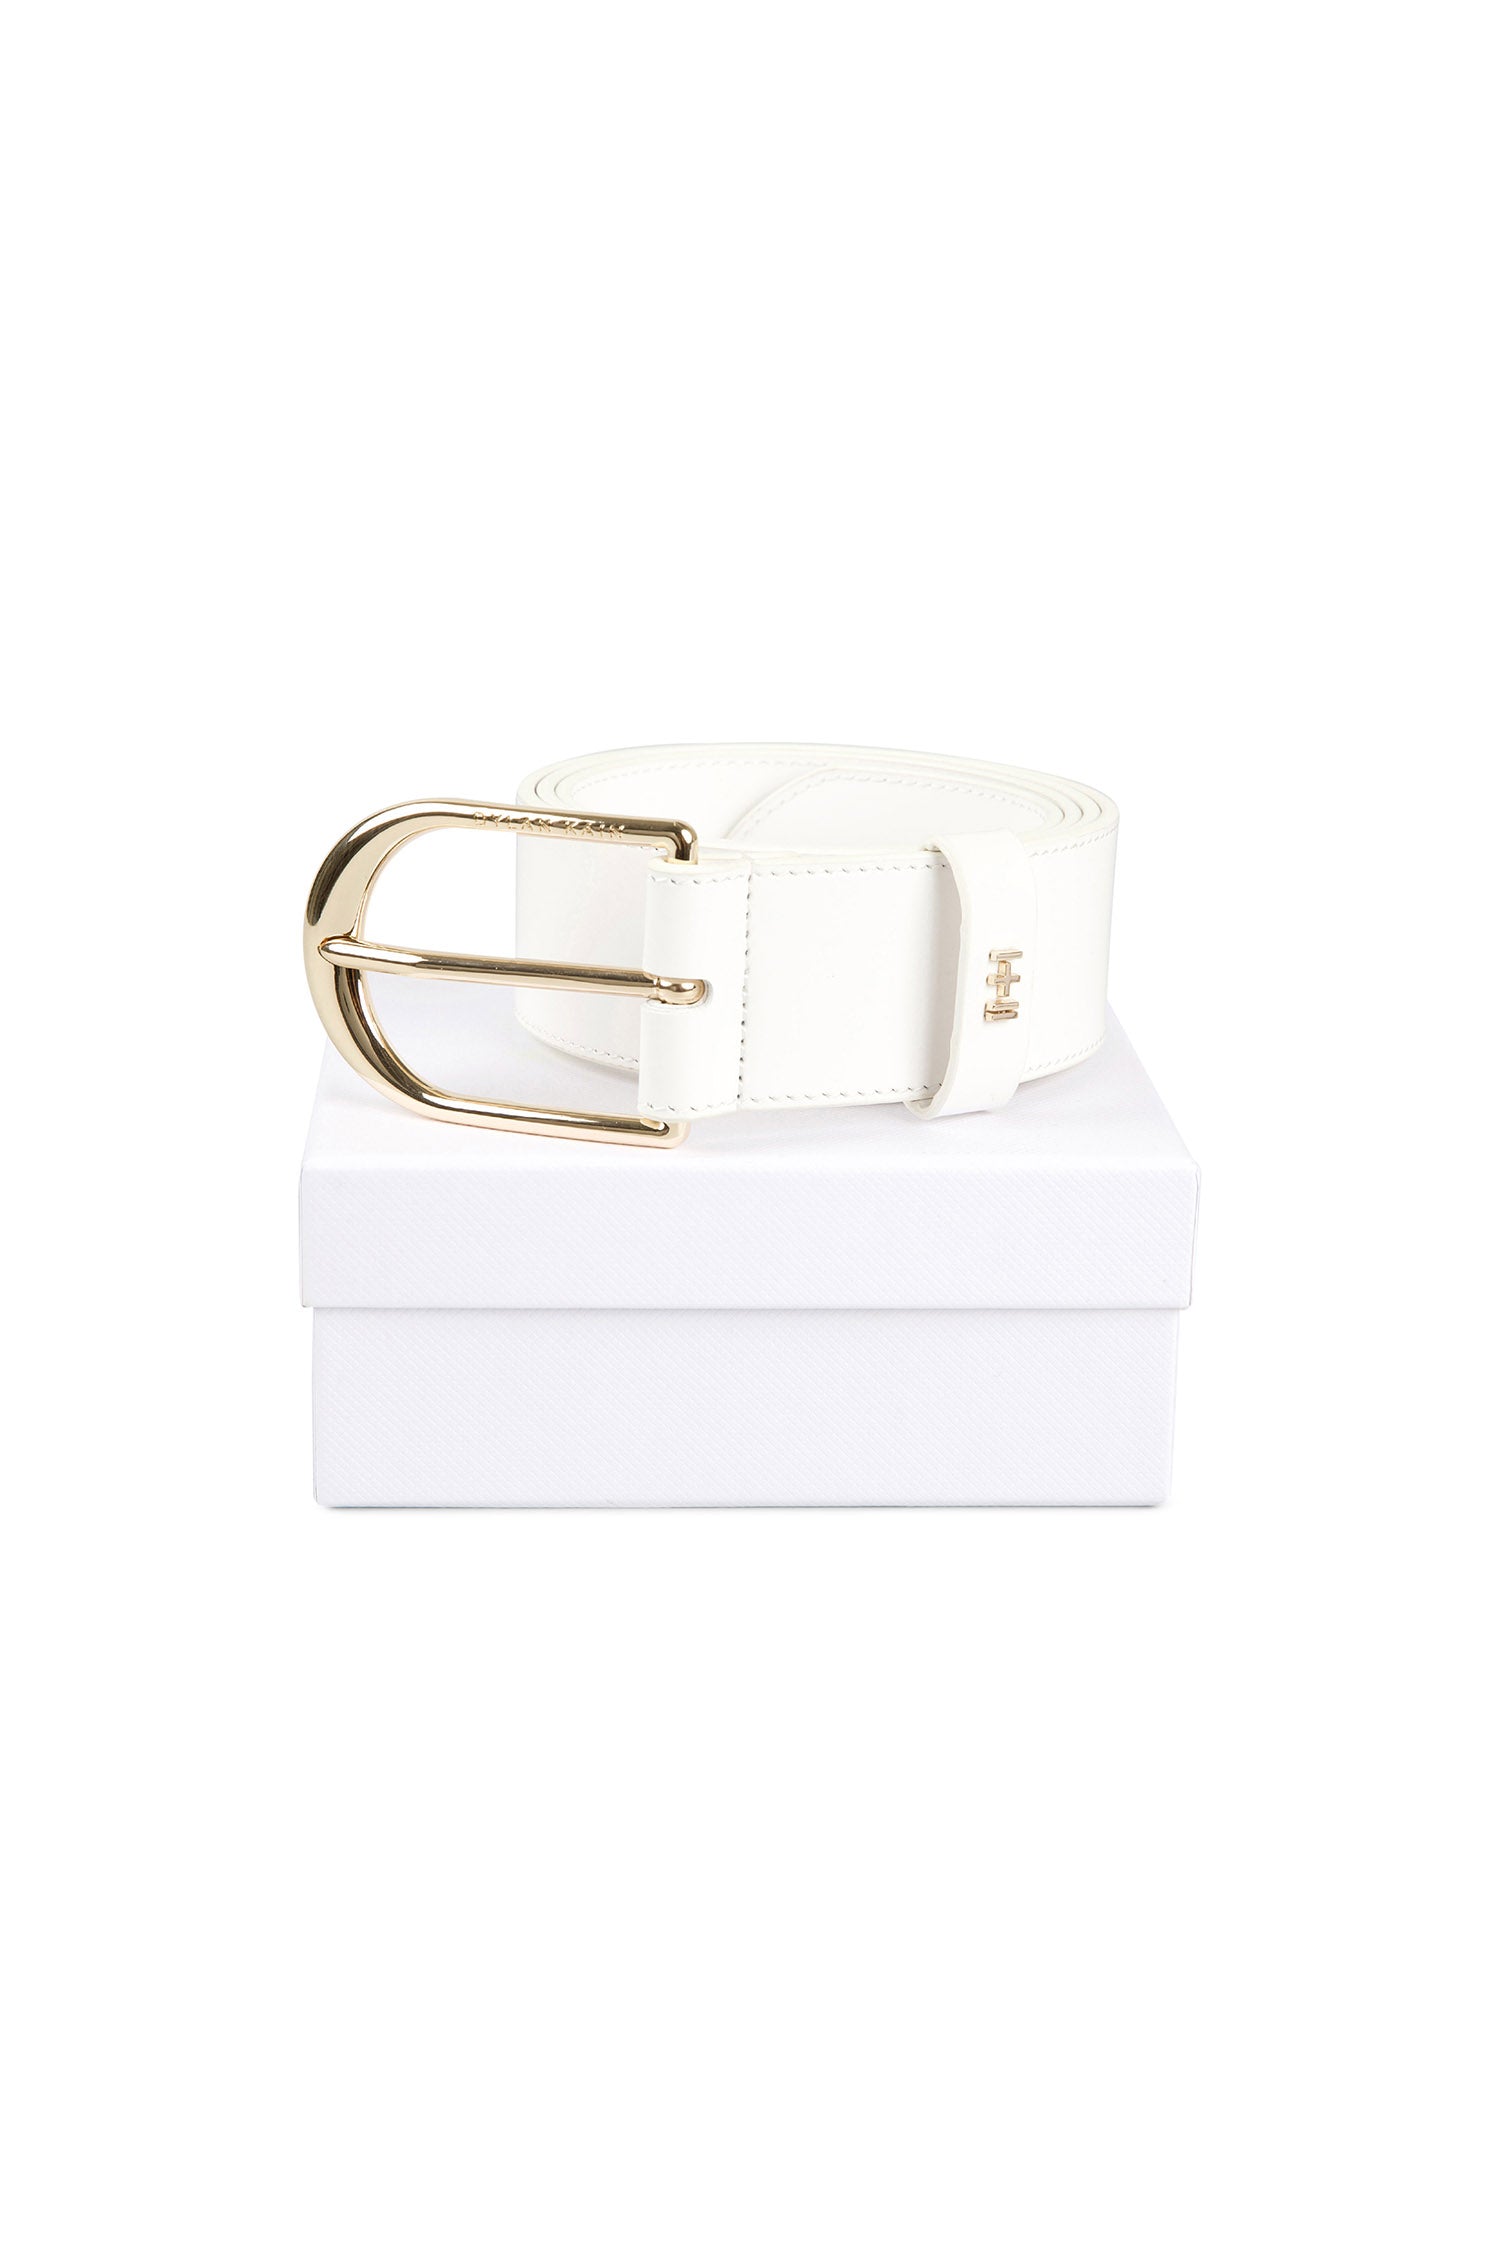 The Nika Lux Belt White - Gift Edit